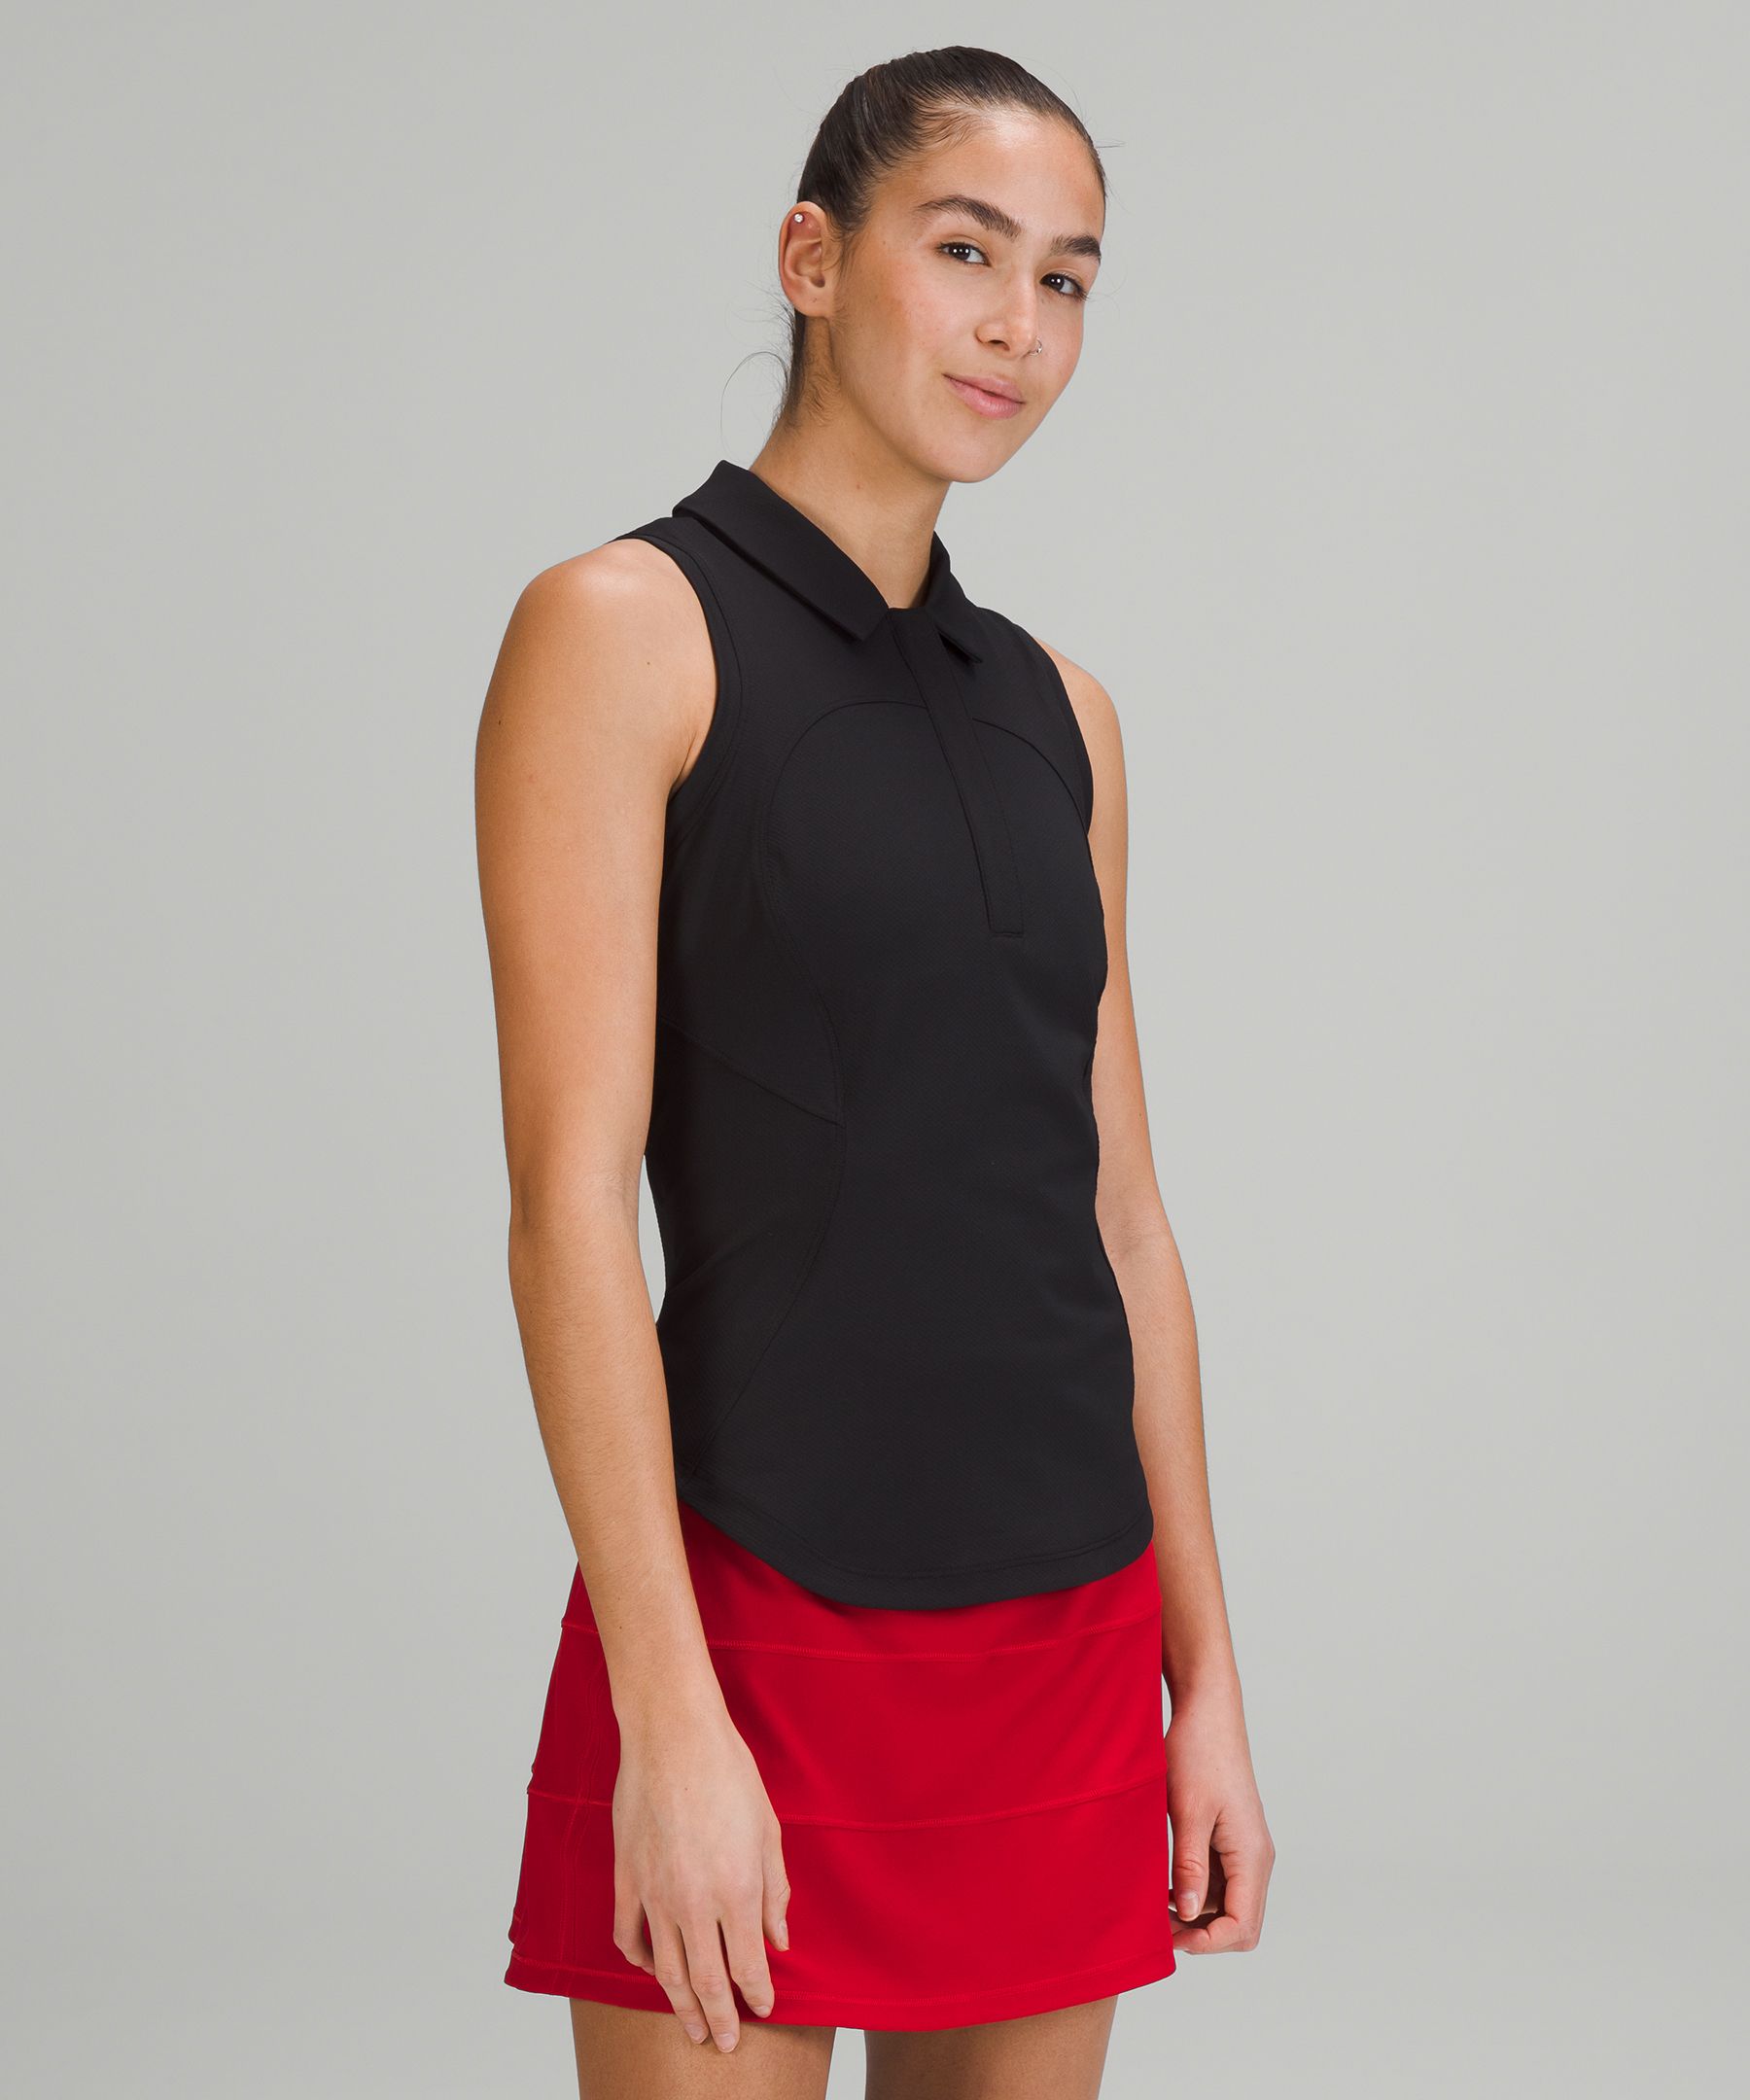 TOKSKS Women's Golf Polo Shirts Sleeveless Workout Tops Quick Dry